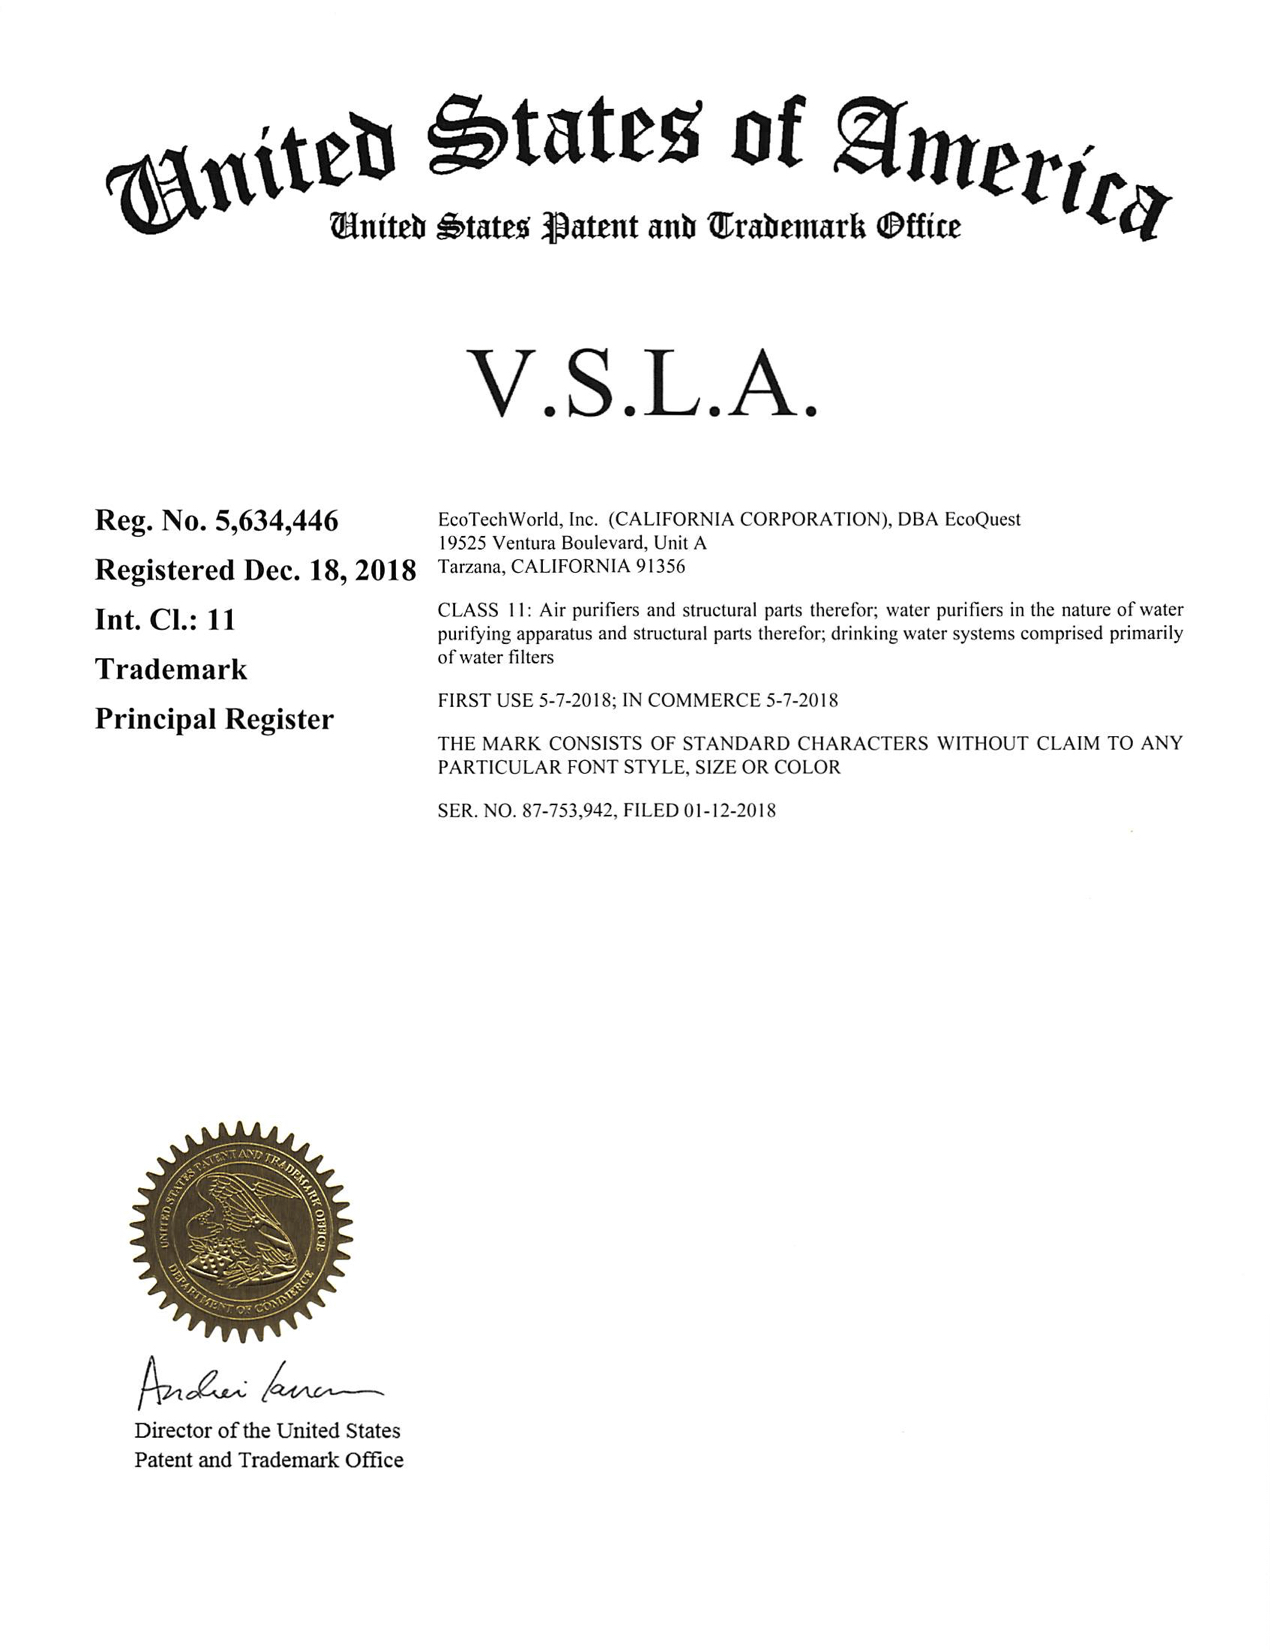 vsla-trademark-certificate-2-.jpg